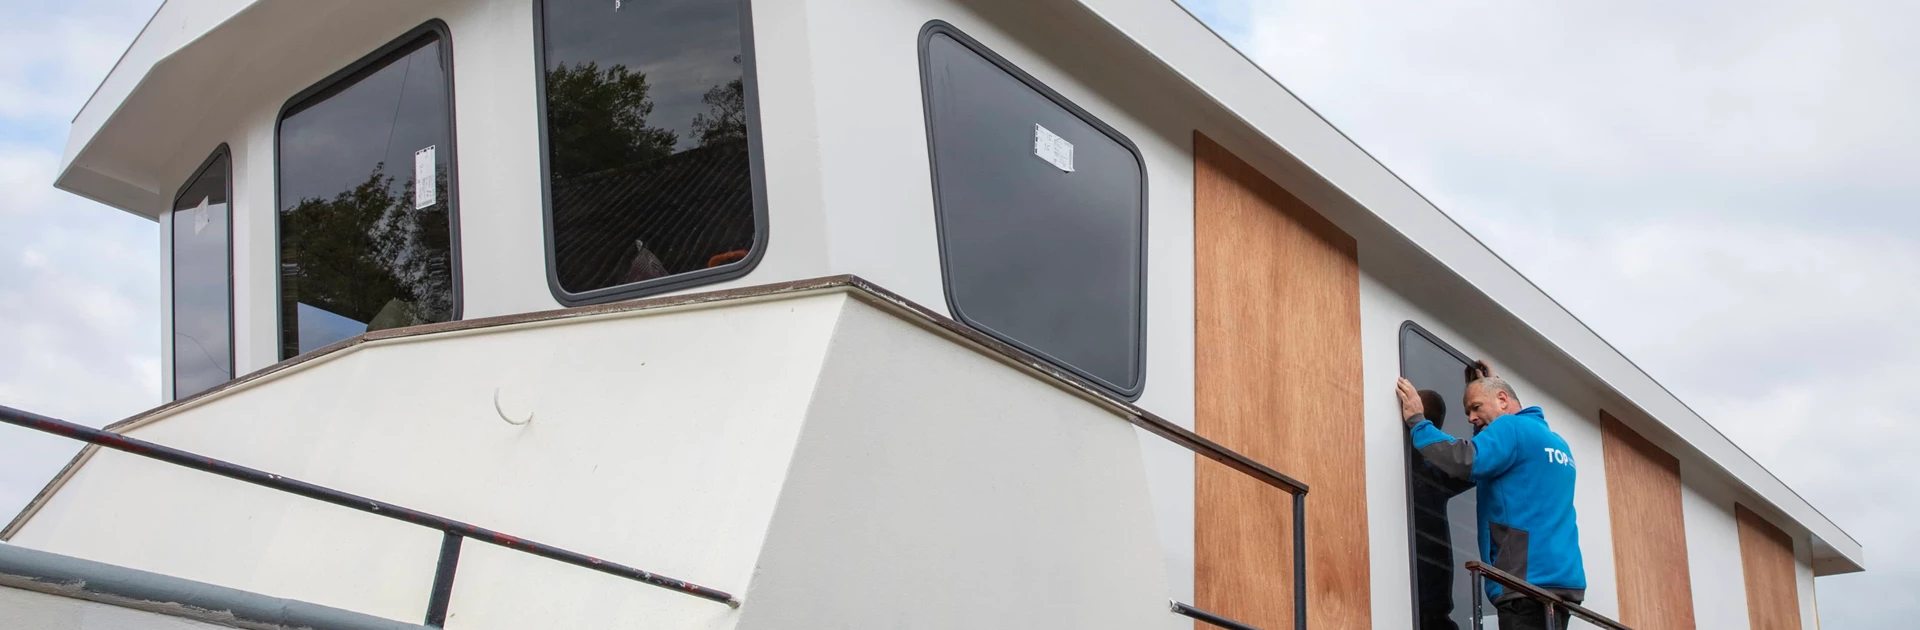 Windows on board a houseboat